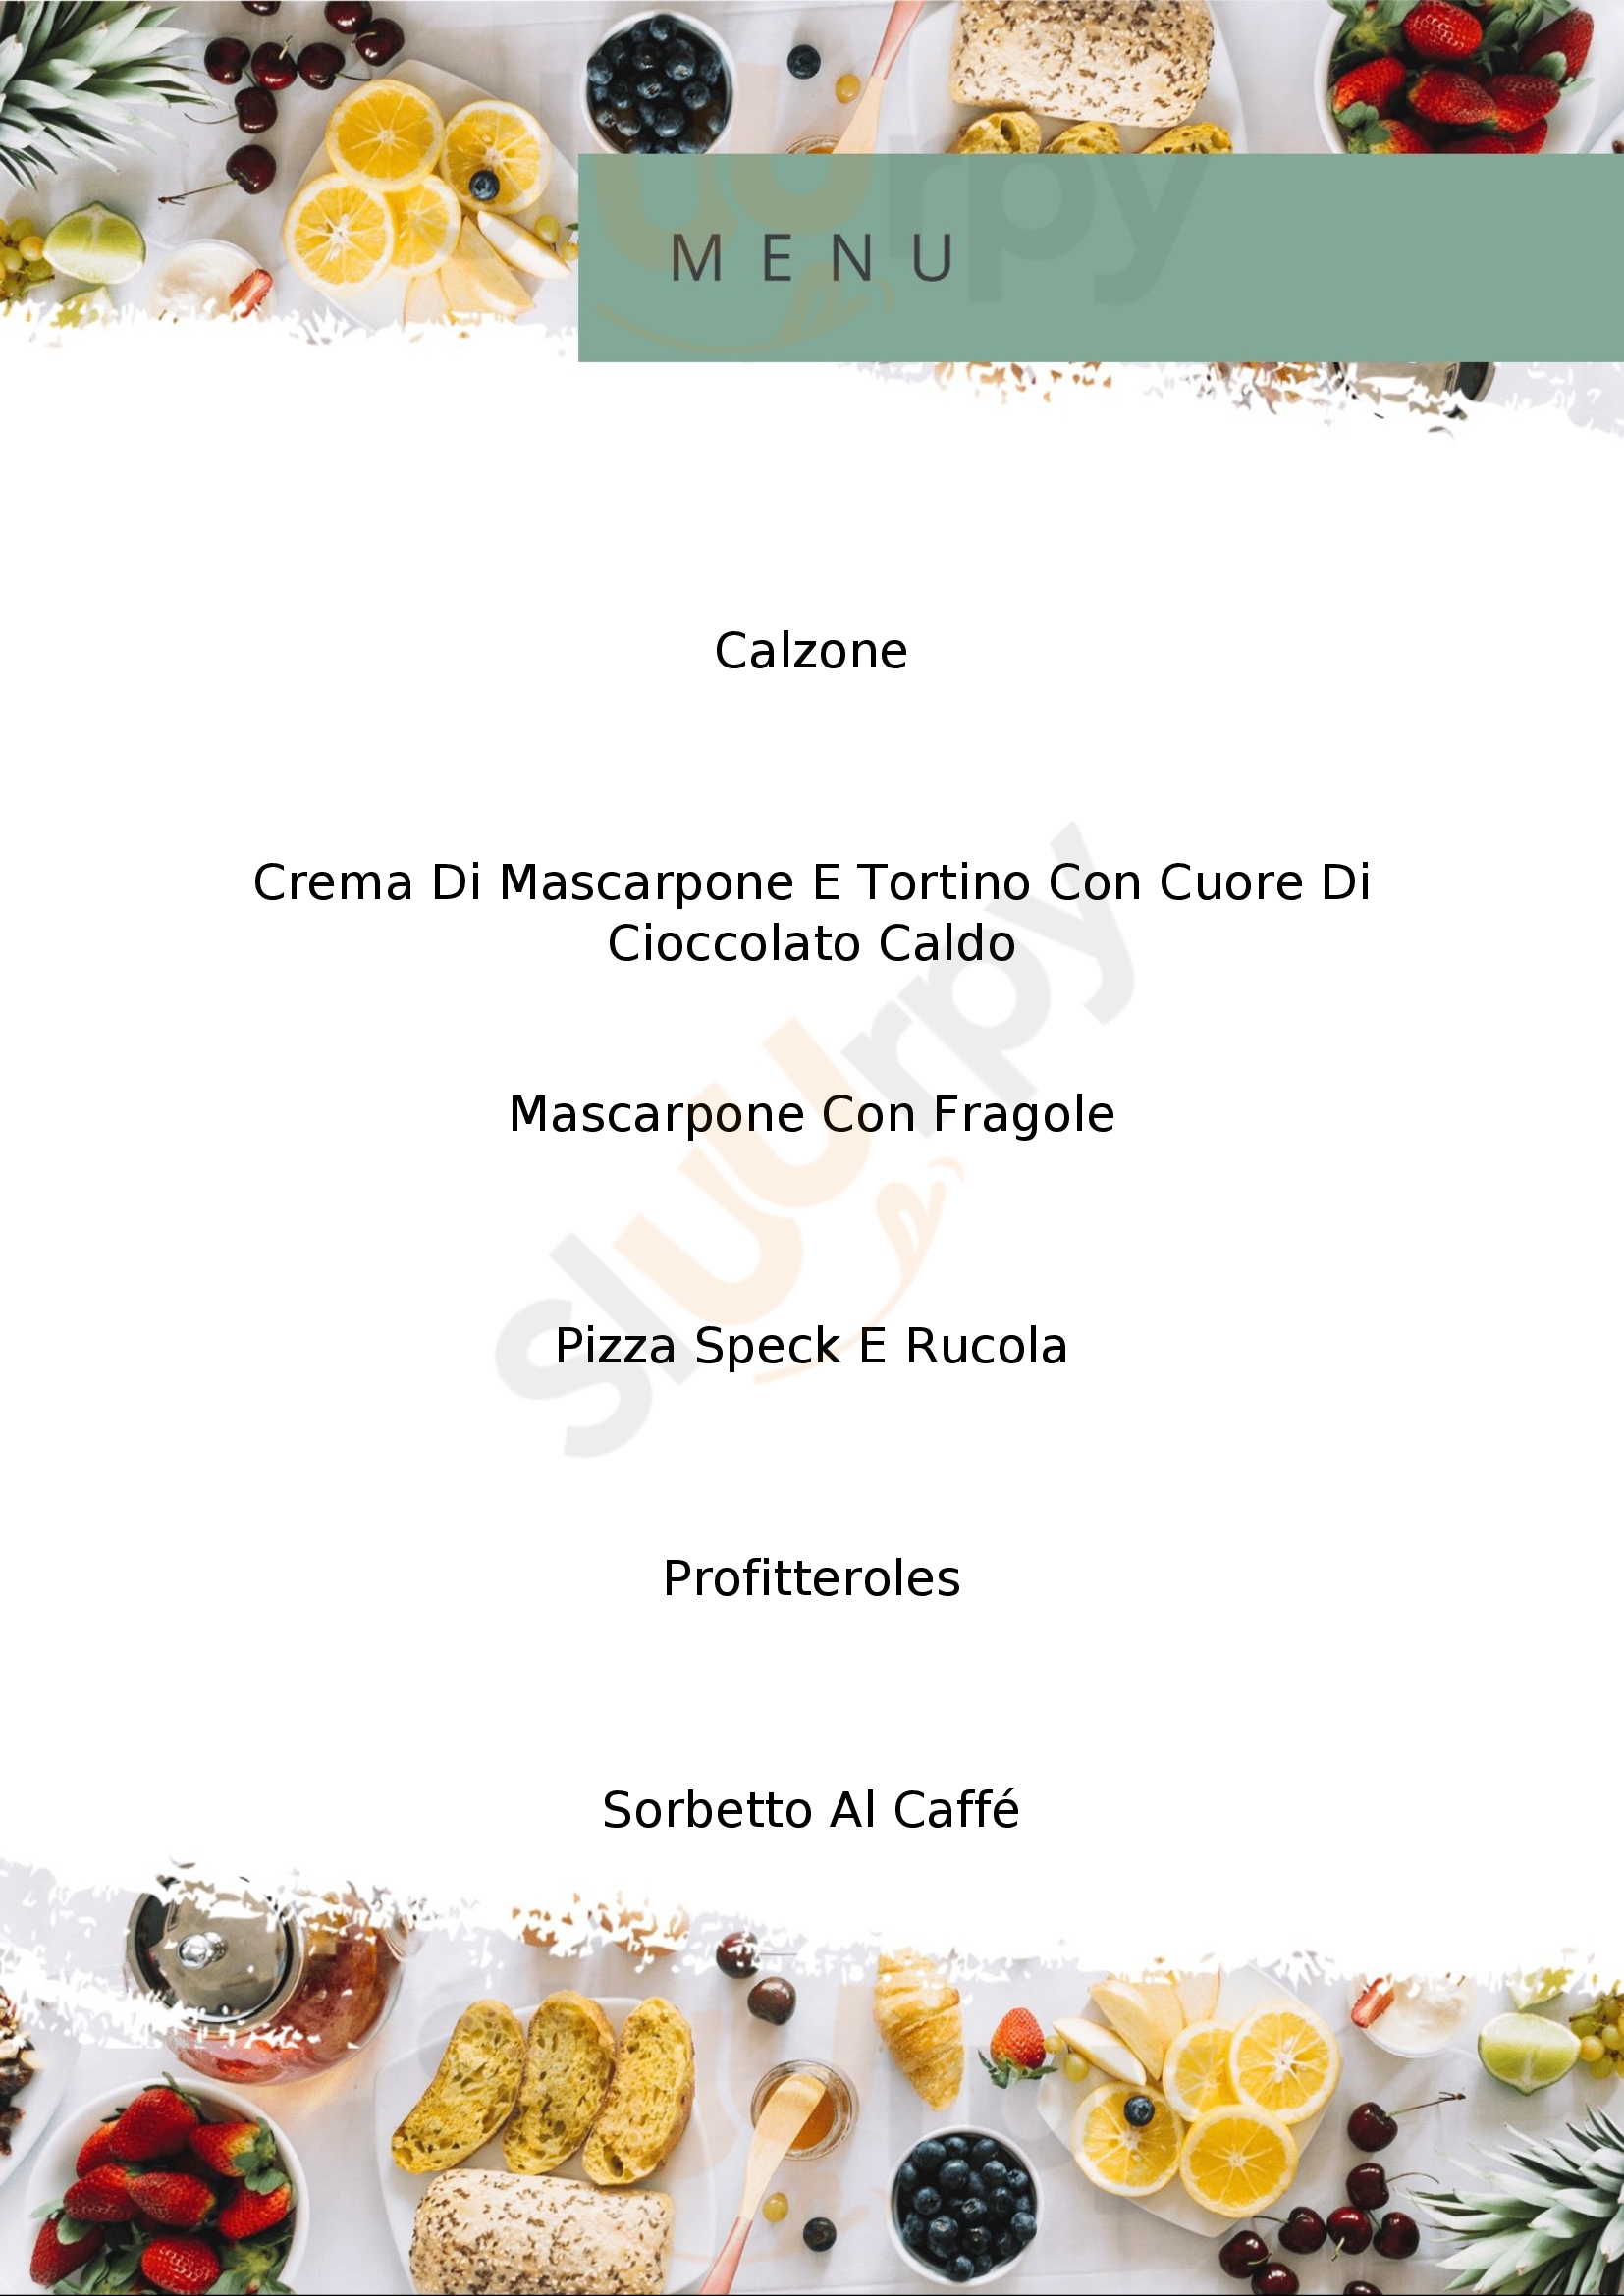 Pizzeria Valerio S.A.S Imola menù 1 pagina